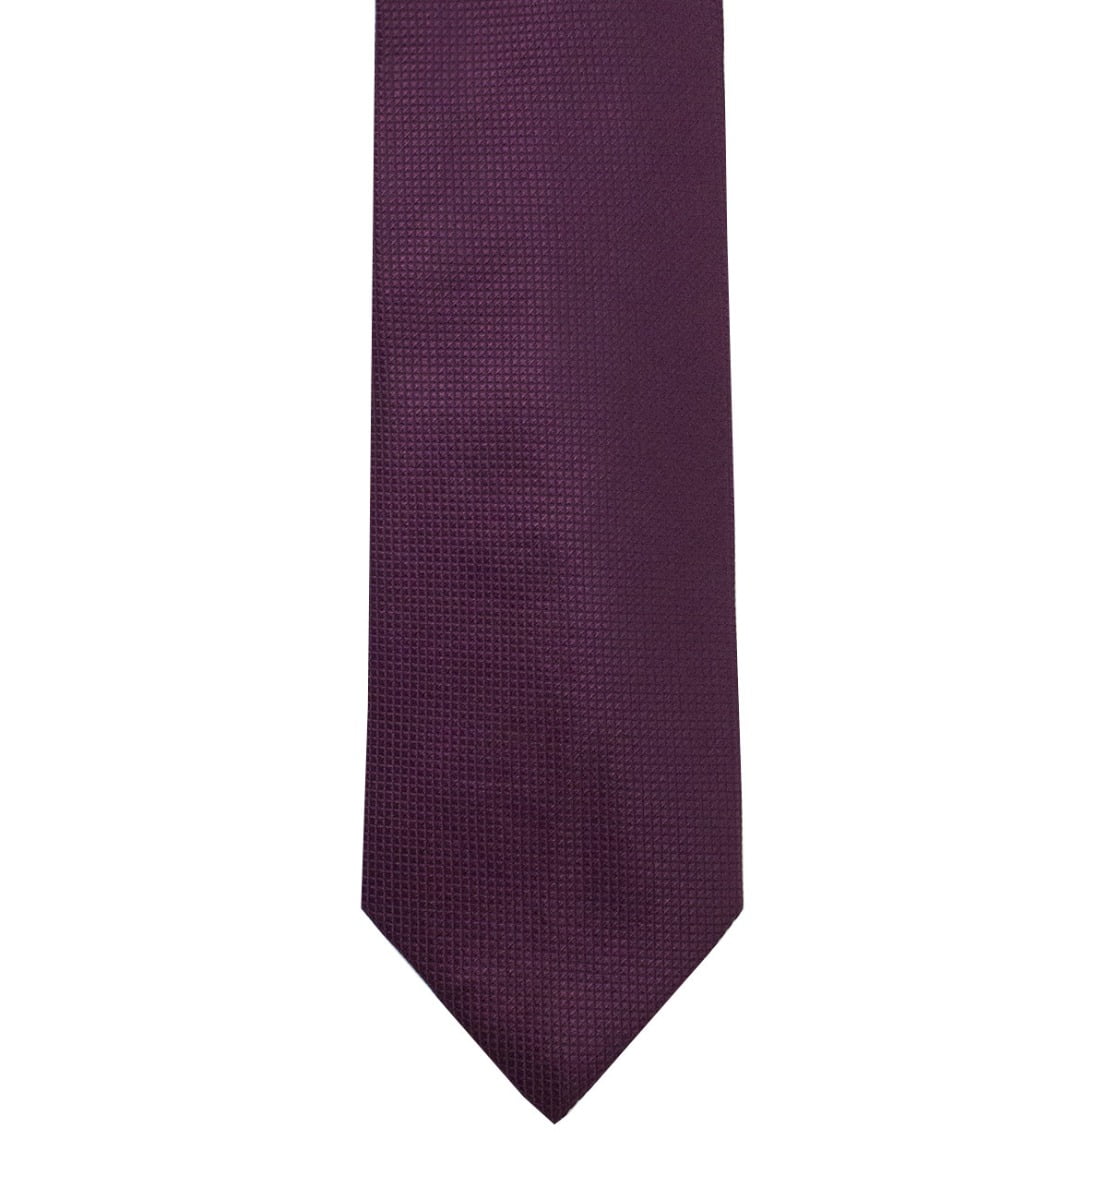 Cravatta uomo seta 8cm tinta unita effetto diamantato da cerimonia elegante